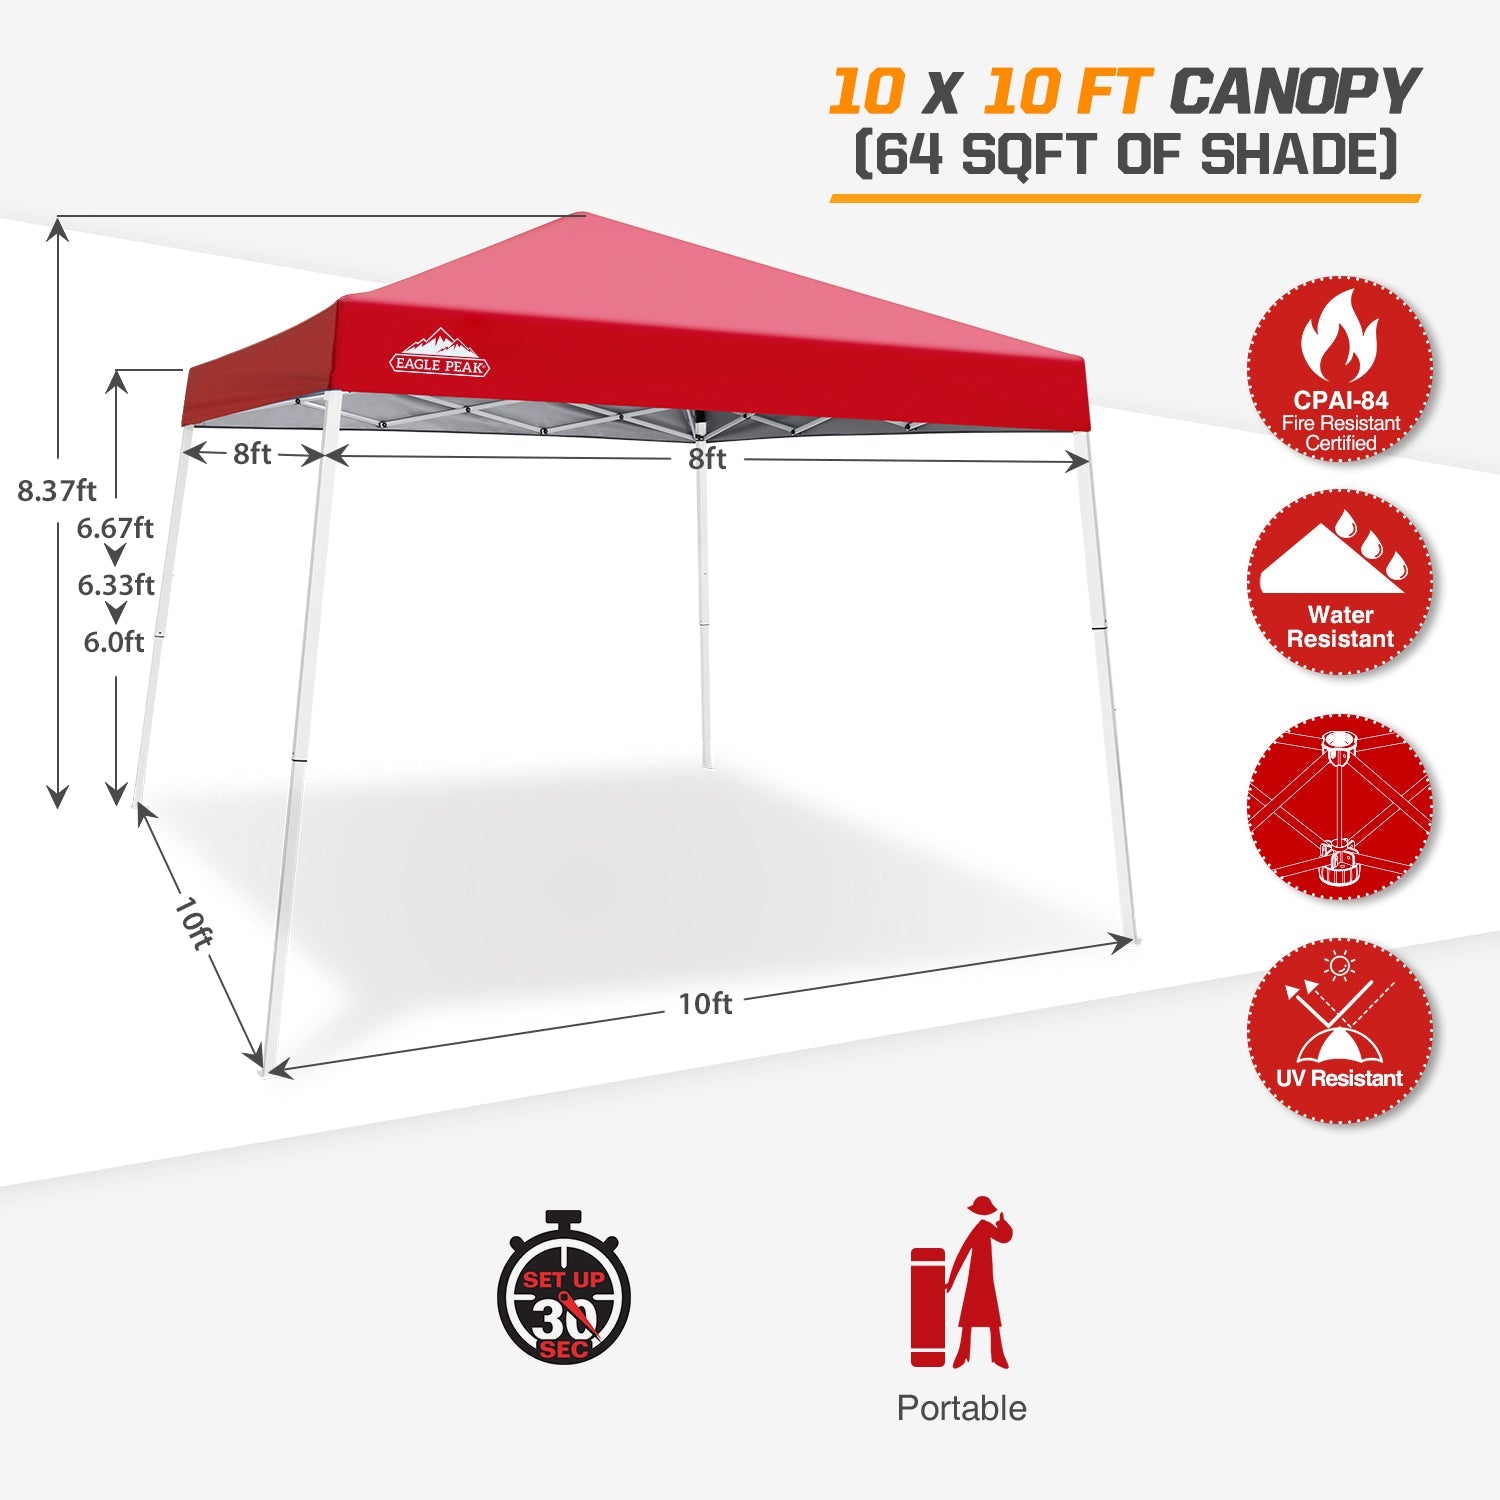 EAGLE PEAK 10' x 10' Slant Leg Pop-up Canopy w/ Easy Peak One Person Setup (64 sqft of Shade)